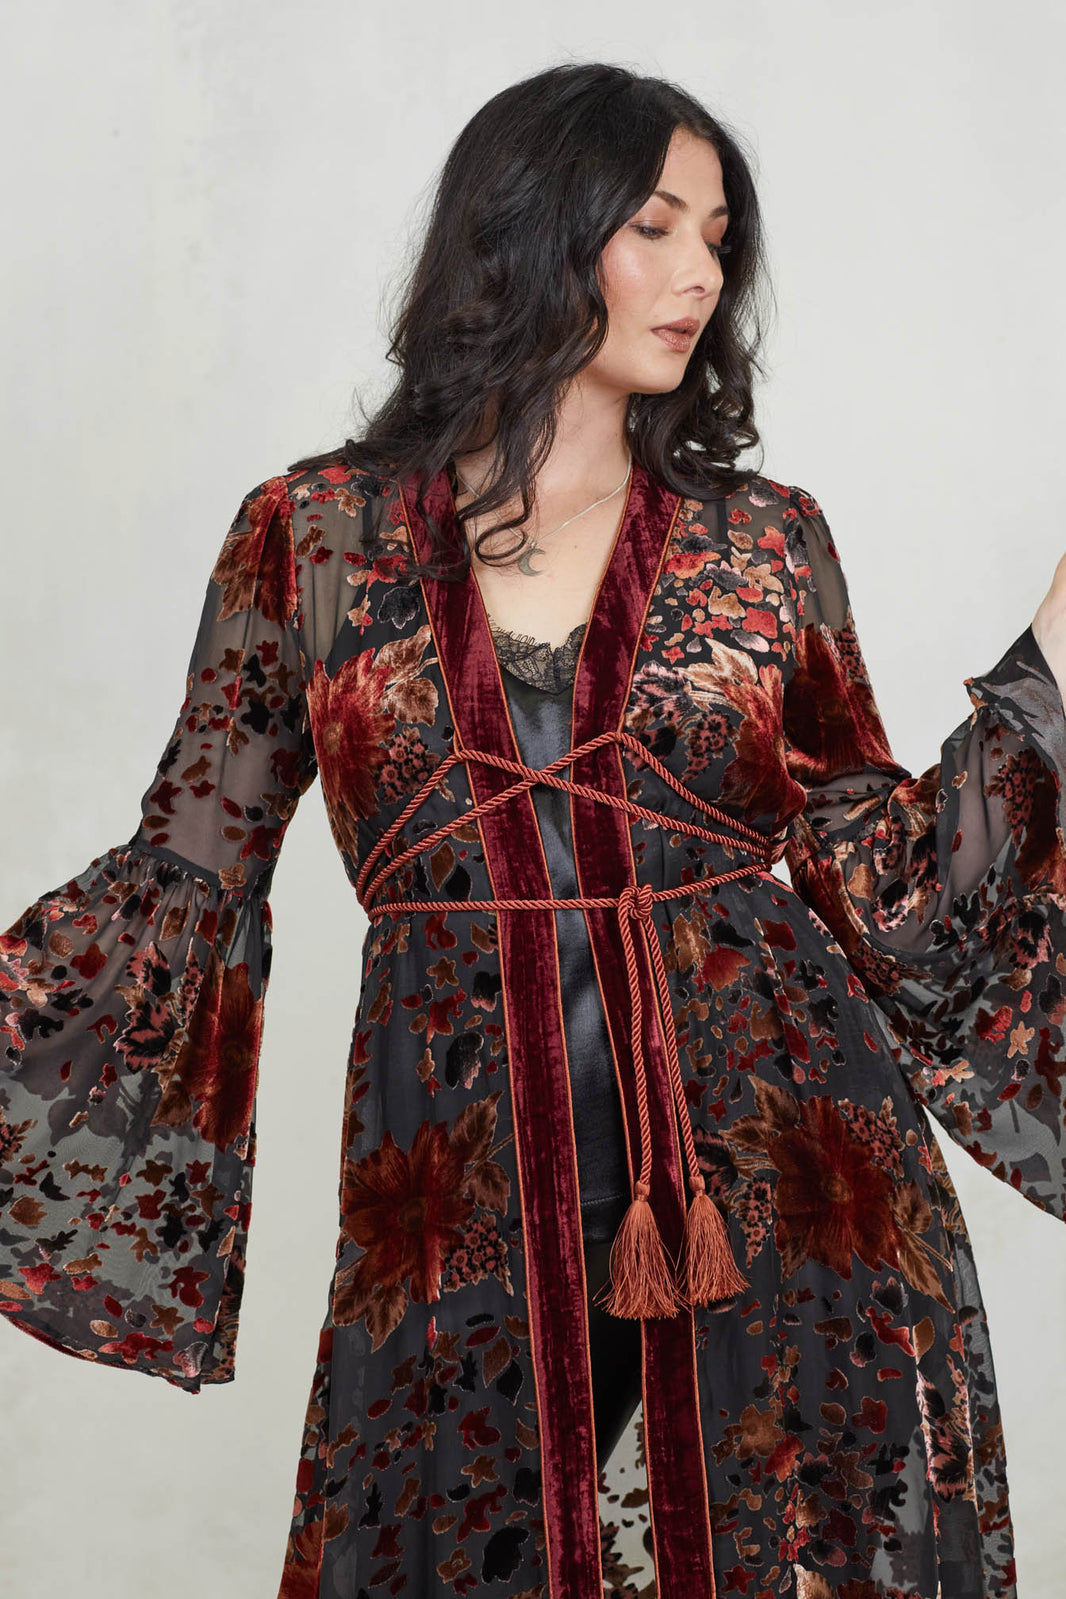 Shop Women's Vintage Inspired Fashion Kimonos | Little Lies